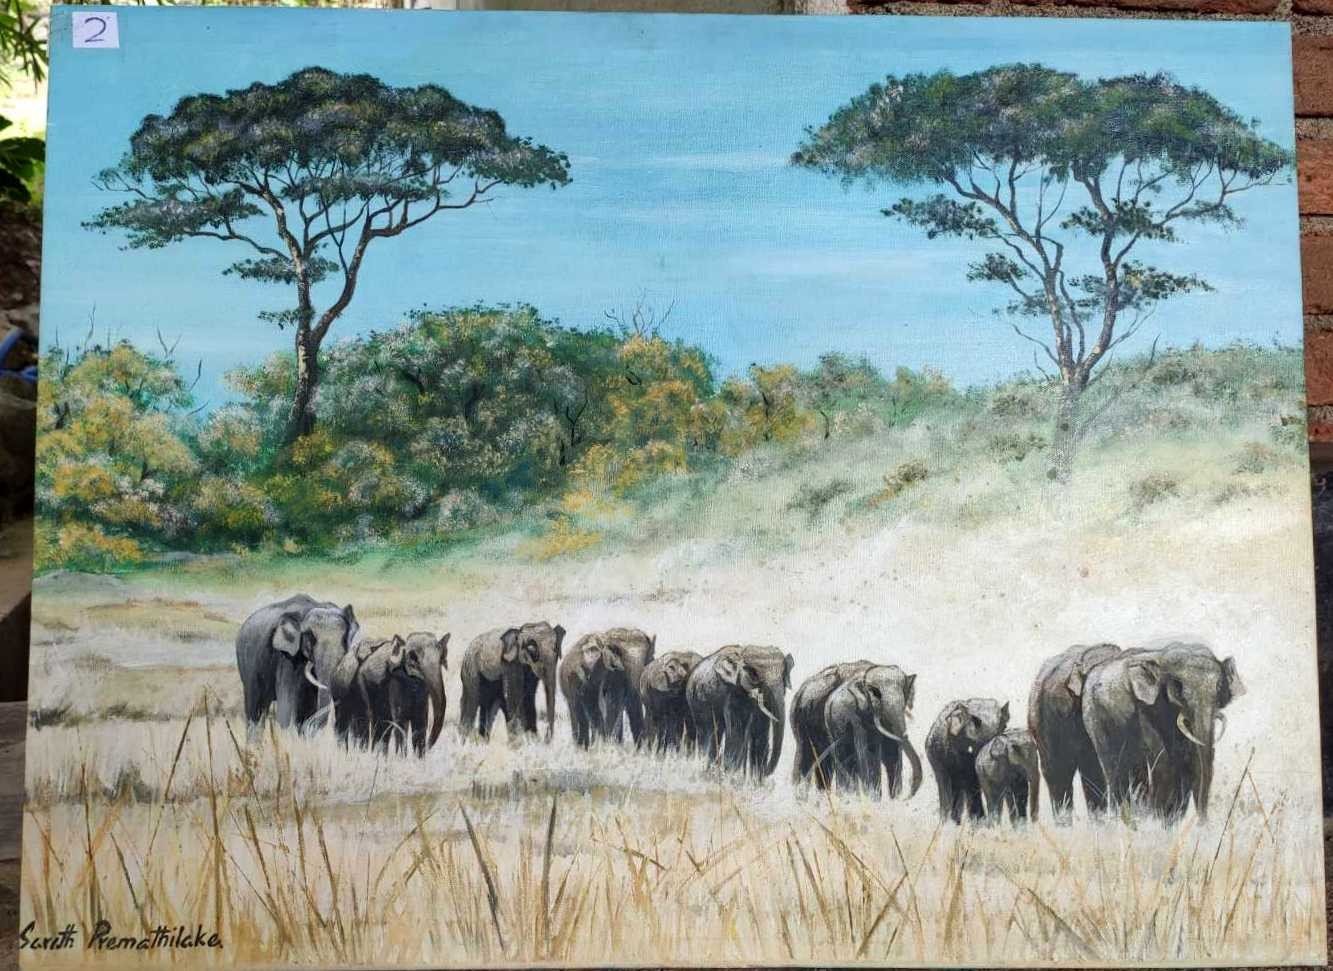 Herd of elephants by Sarath Premathilake